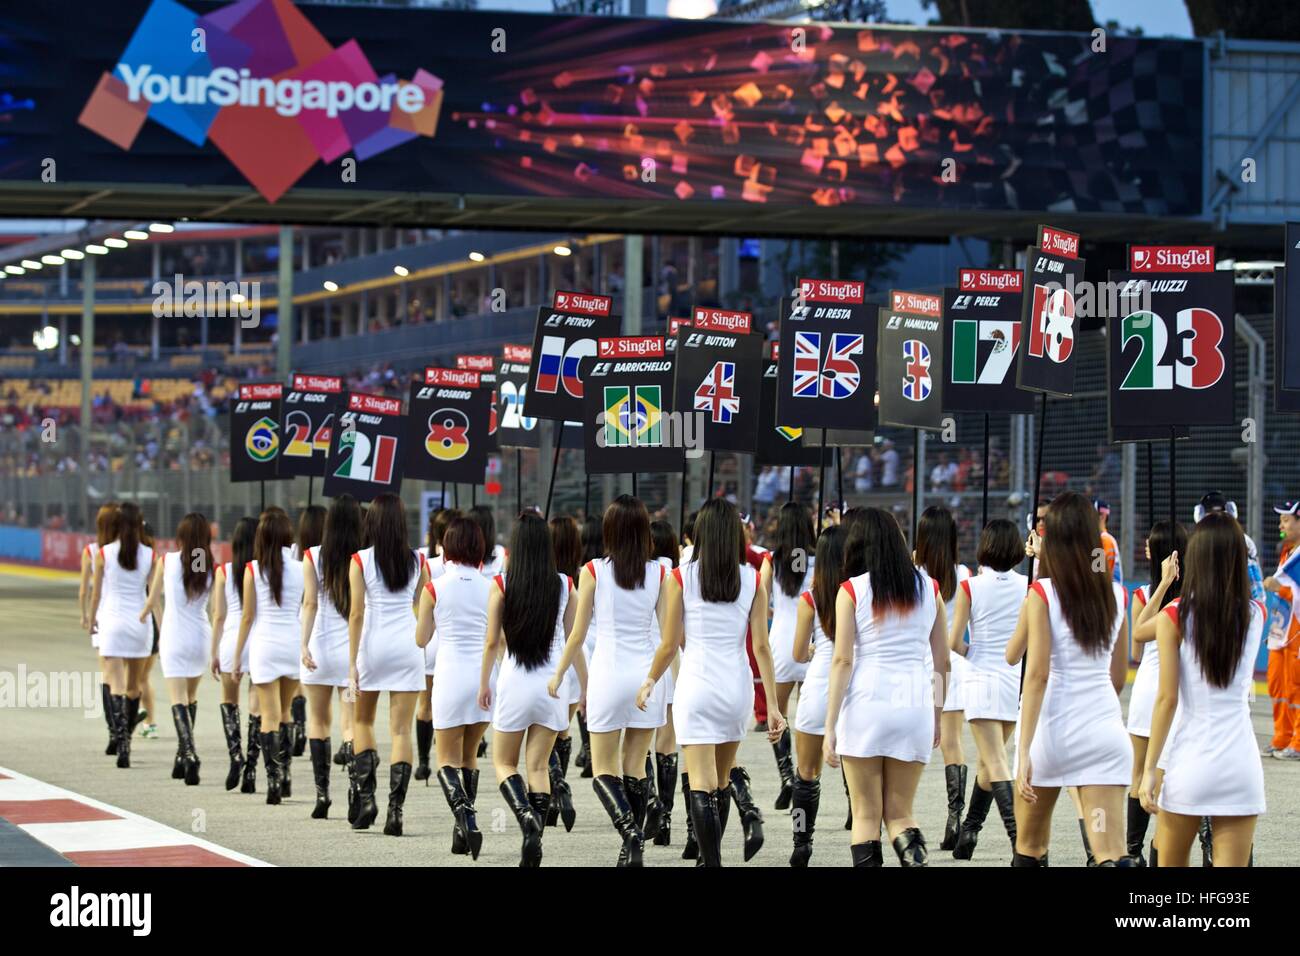 Singapore F1 grand prix formula one grid girls flags pattern uniforms YourSingapore main straight driver cards Stock Photo